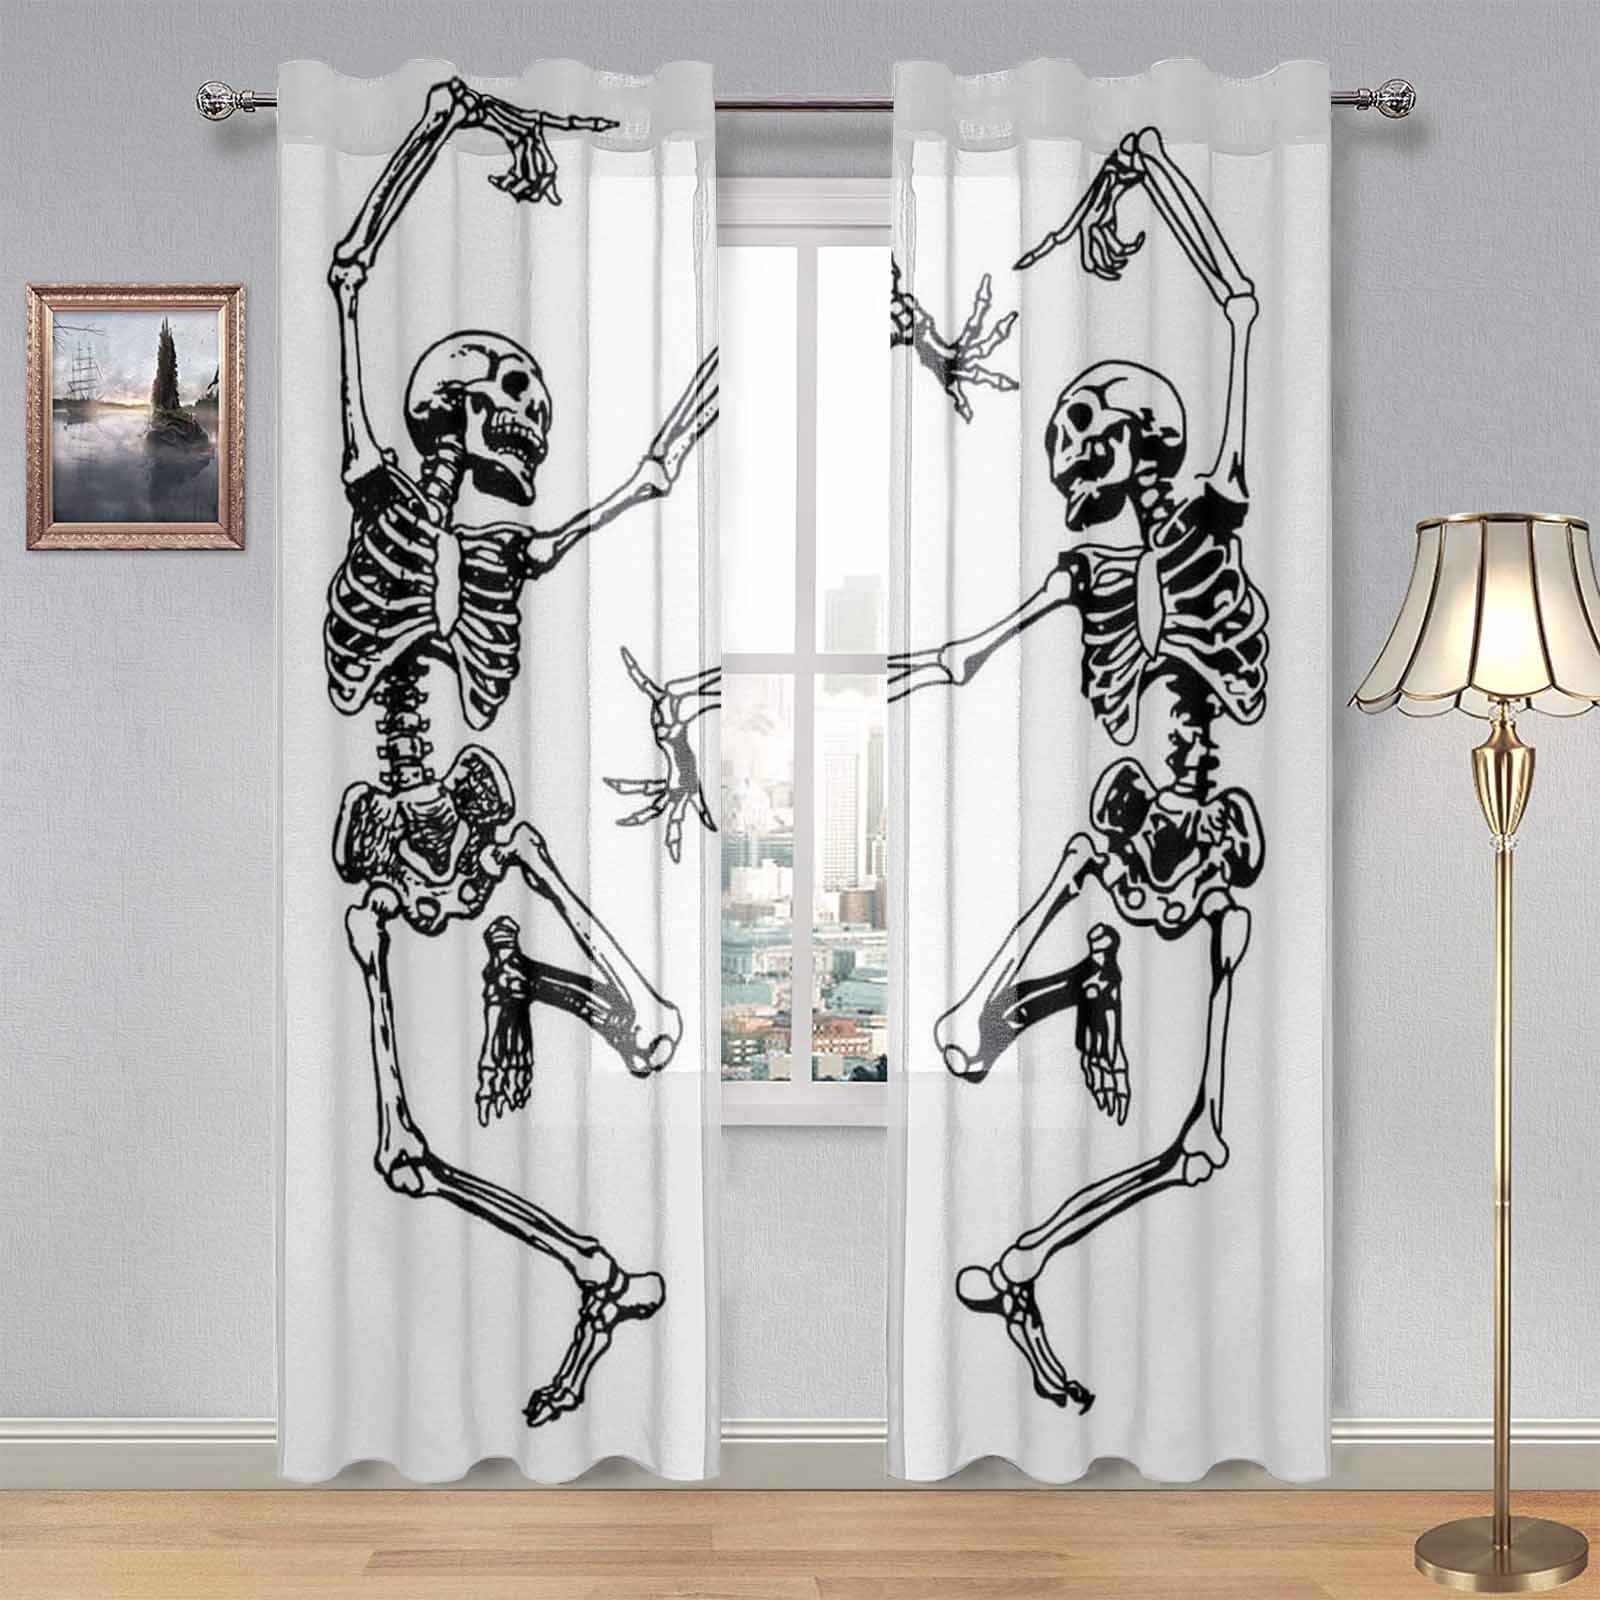 Kate McEnroe New York Sheer 2 - Panel Window Curtains in Monochrome Dancing SkeletonsWindow CurtainsDG1170271DXH7858D